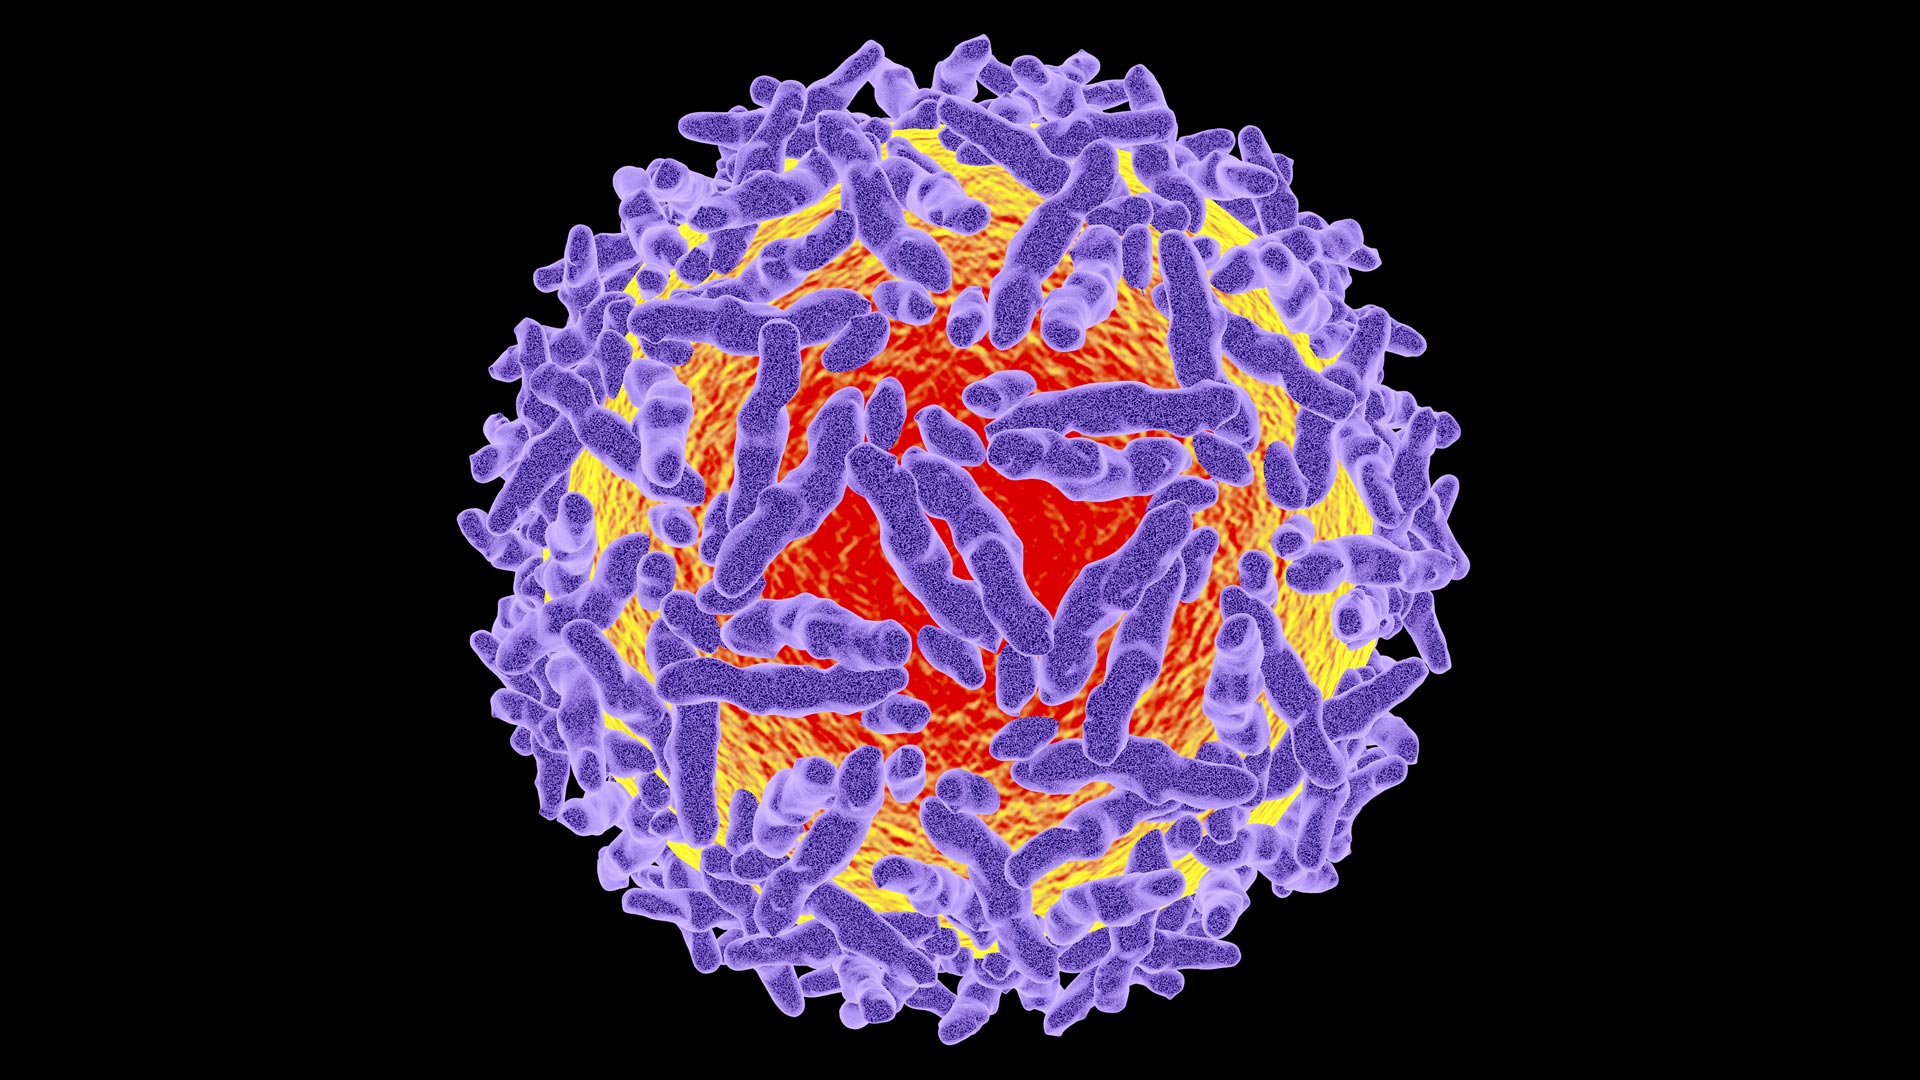 Insights into Alphavirus Replication